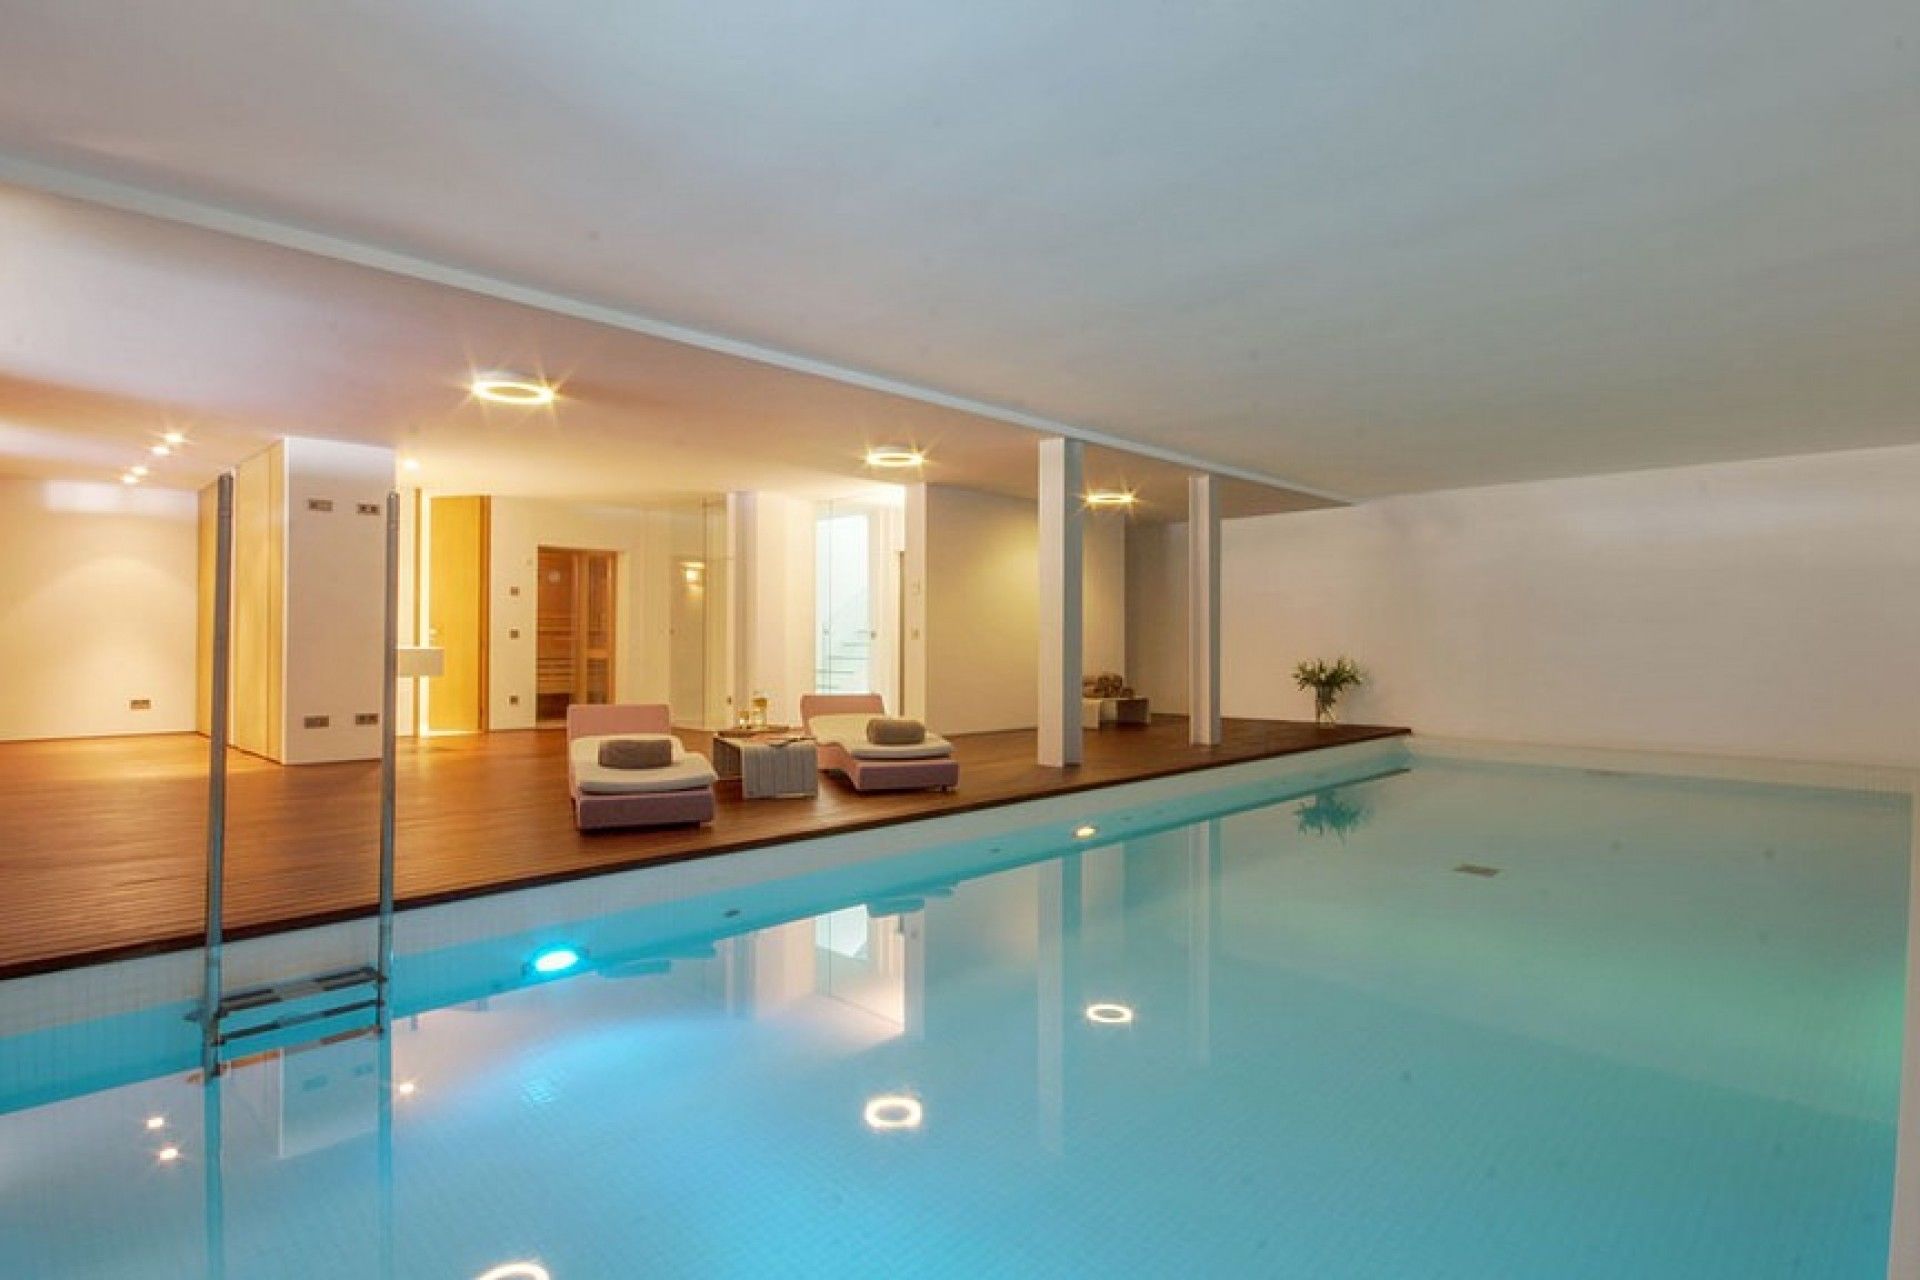  Indoor pool with wellness area